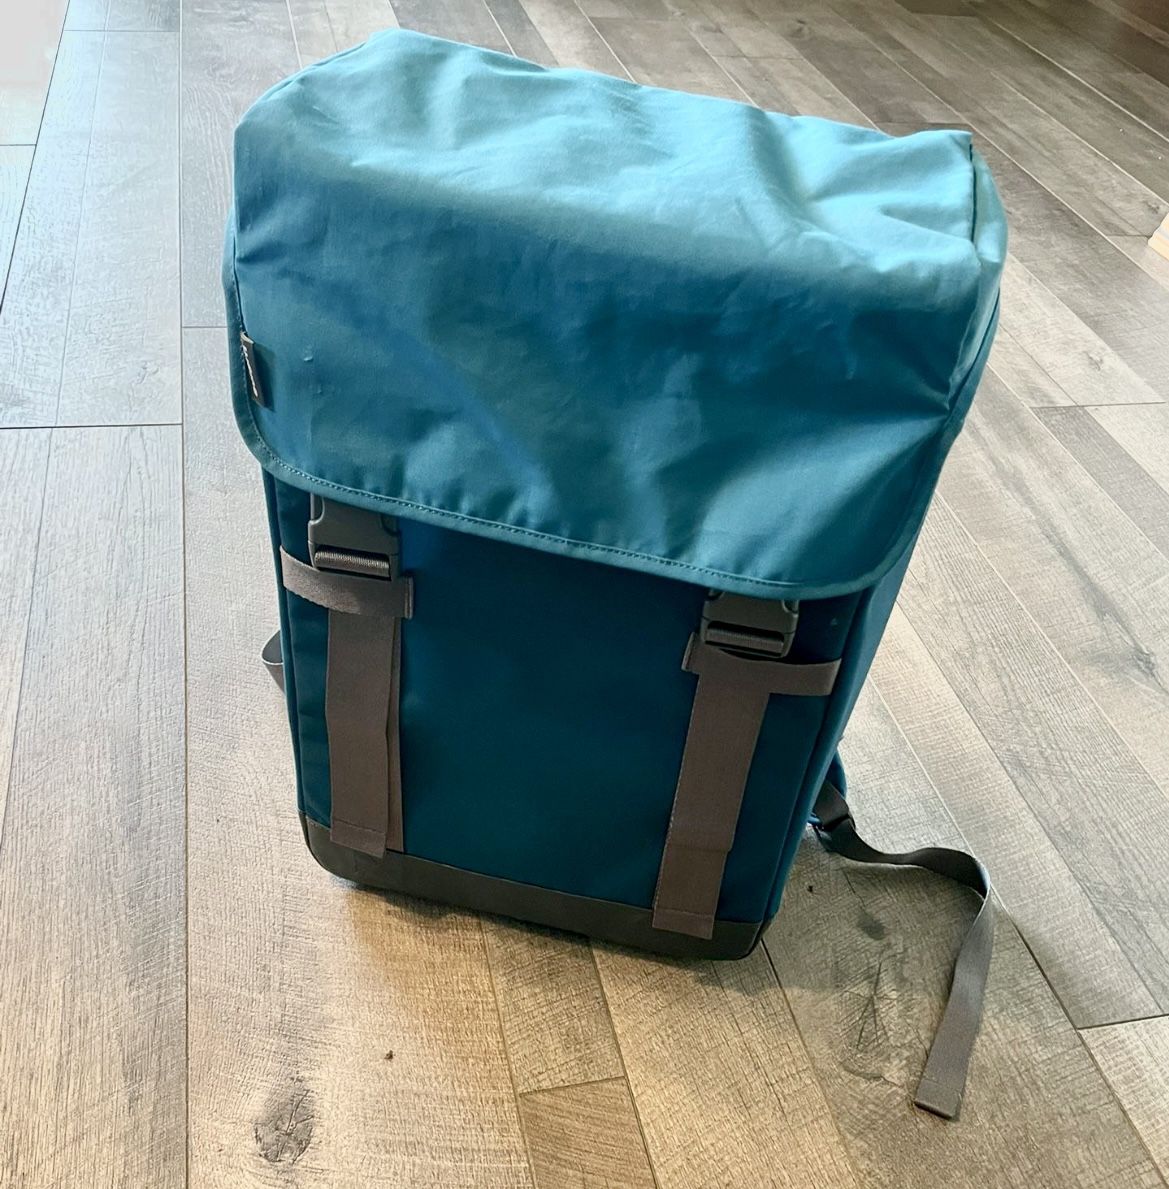 REI “EVRGRN” Teal, Insulated Backpack Cooler. Adjustable, Padded Straps. 